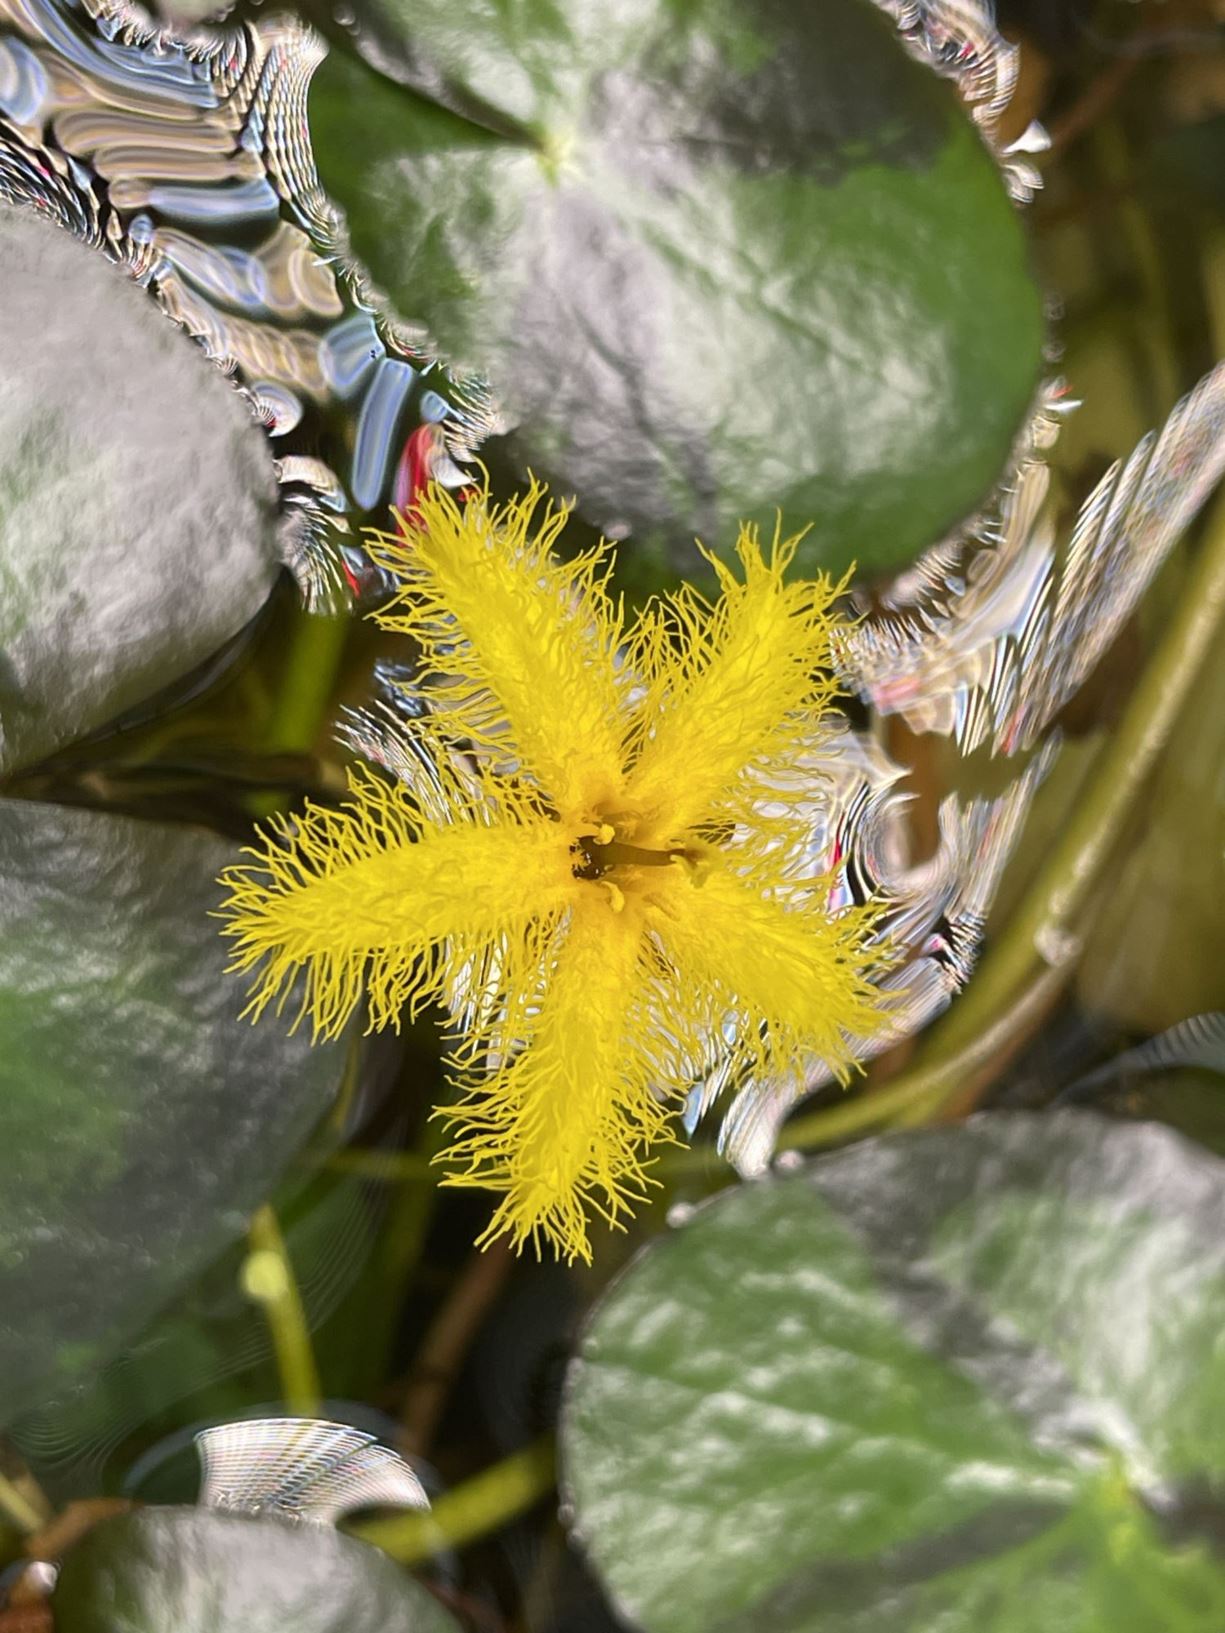 Nymphoides aurantiaca - Yellow-flowered snowflake, 水金莲花 shui jin lian hua